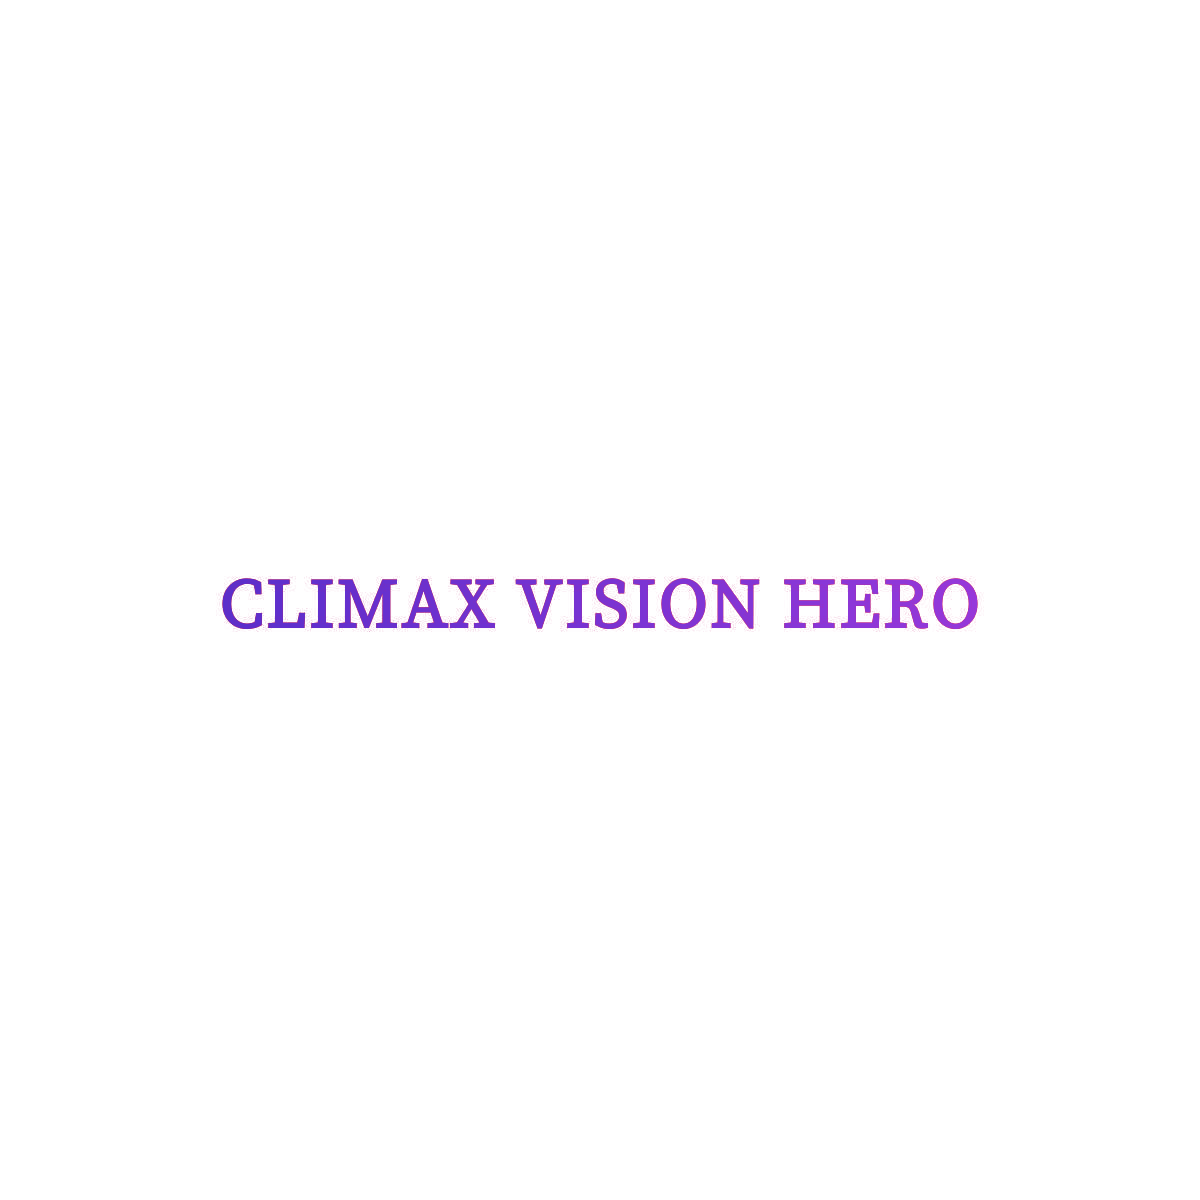 CLIMAX VISION HERO